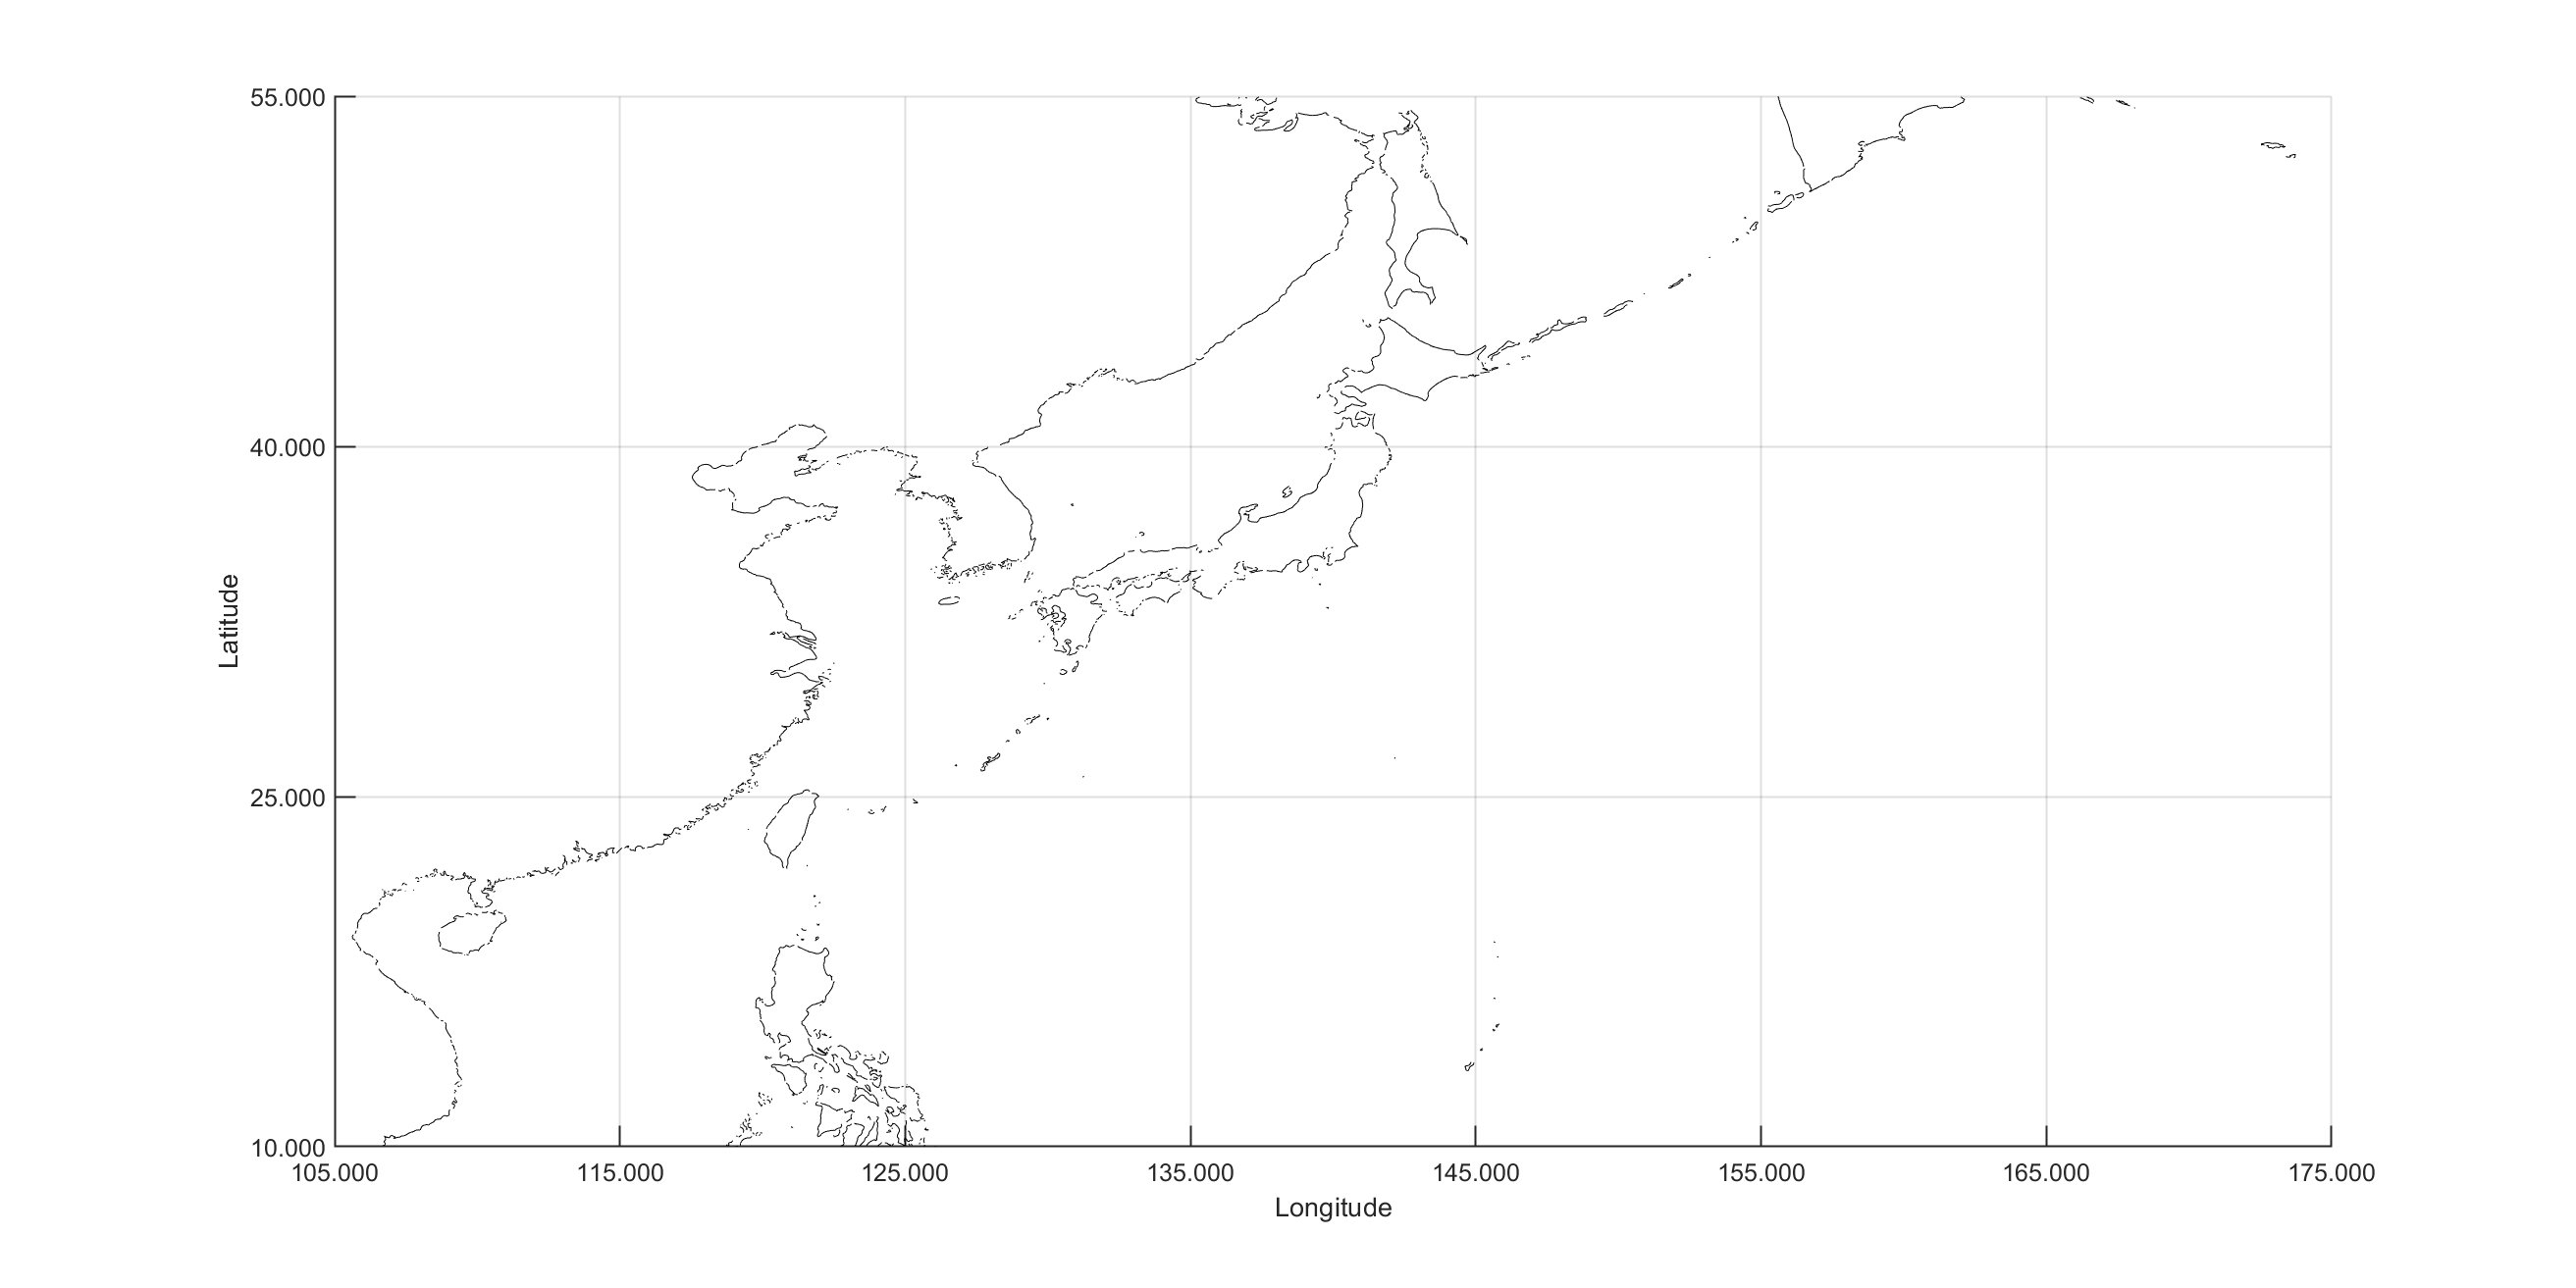 CYCLE_248 - Japan Descending passes